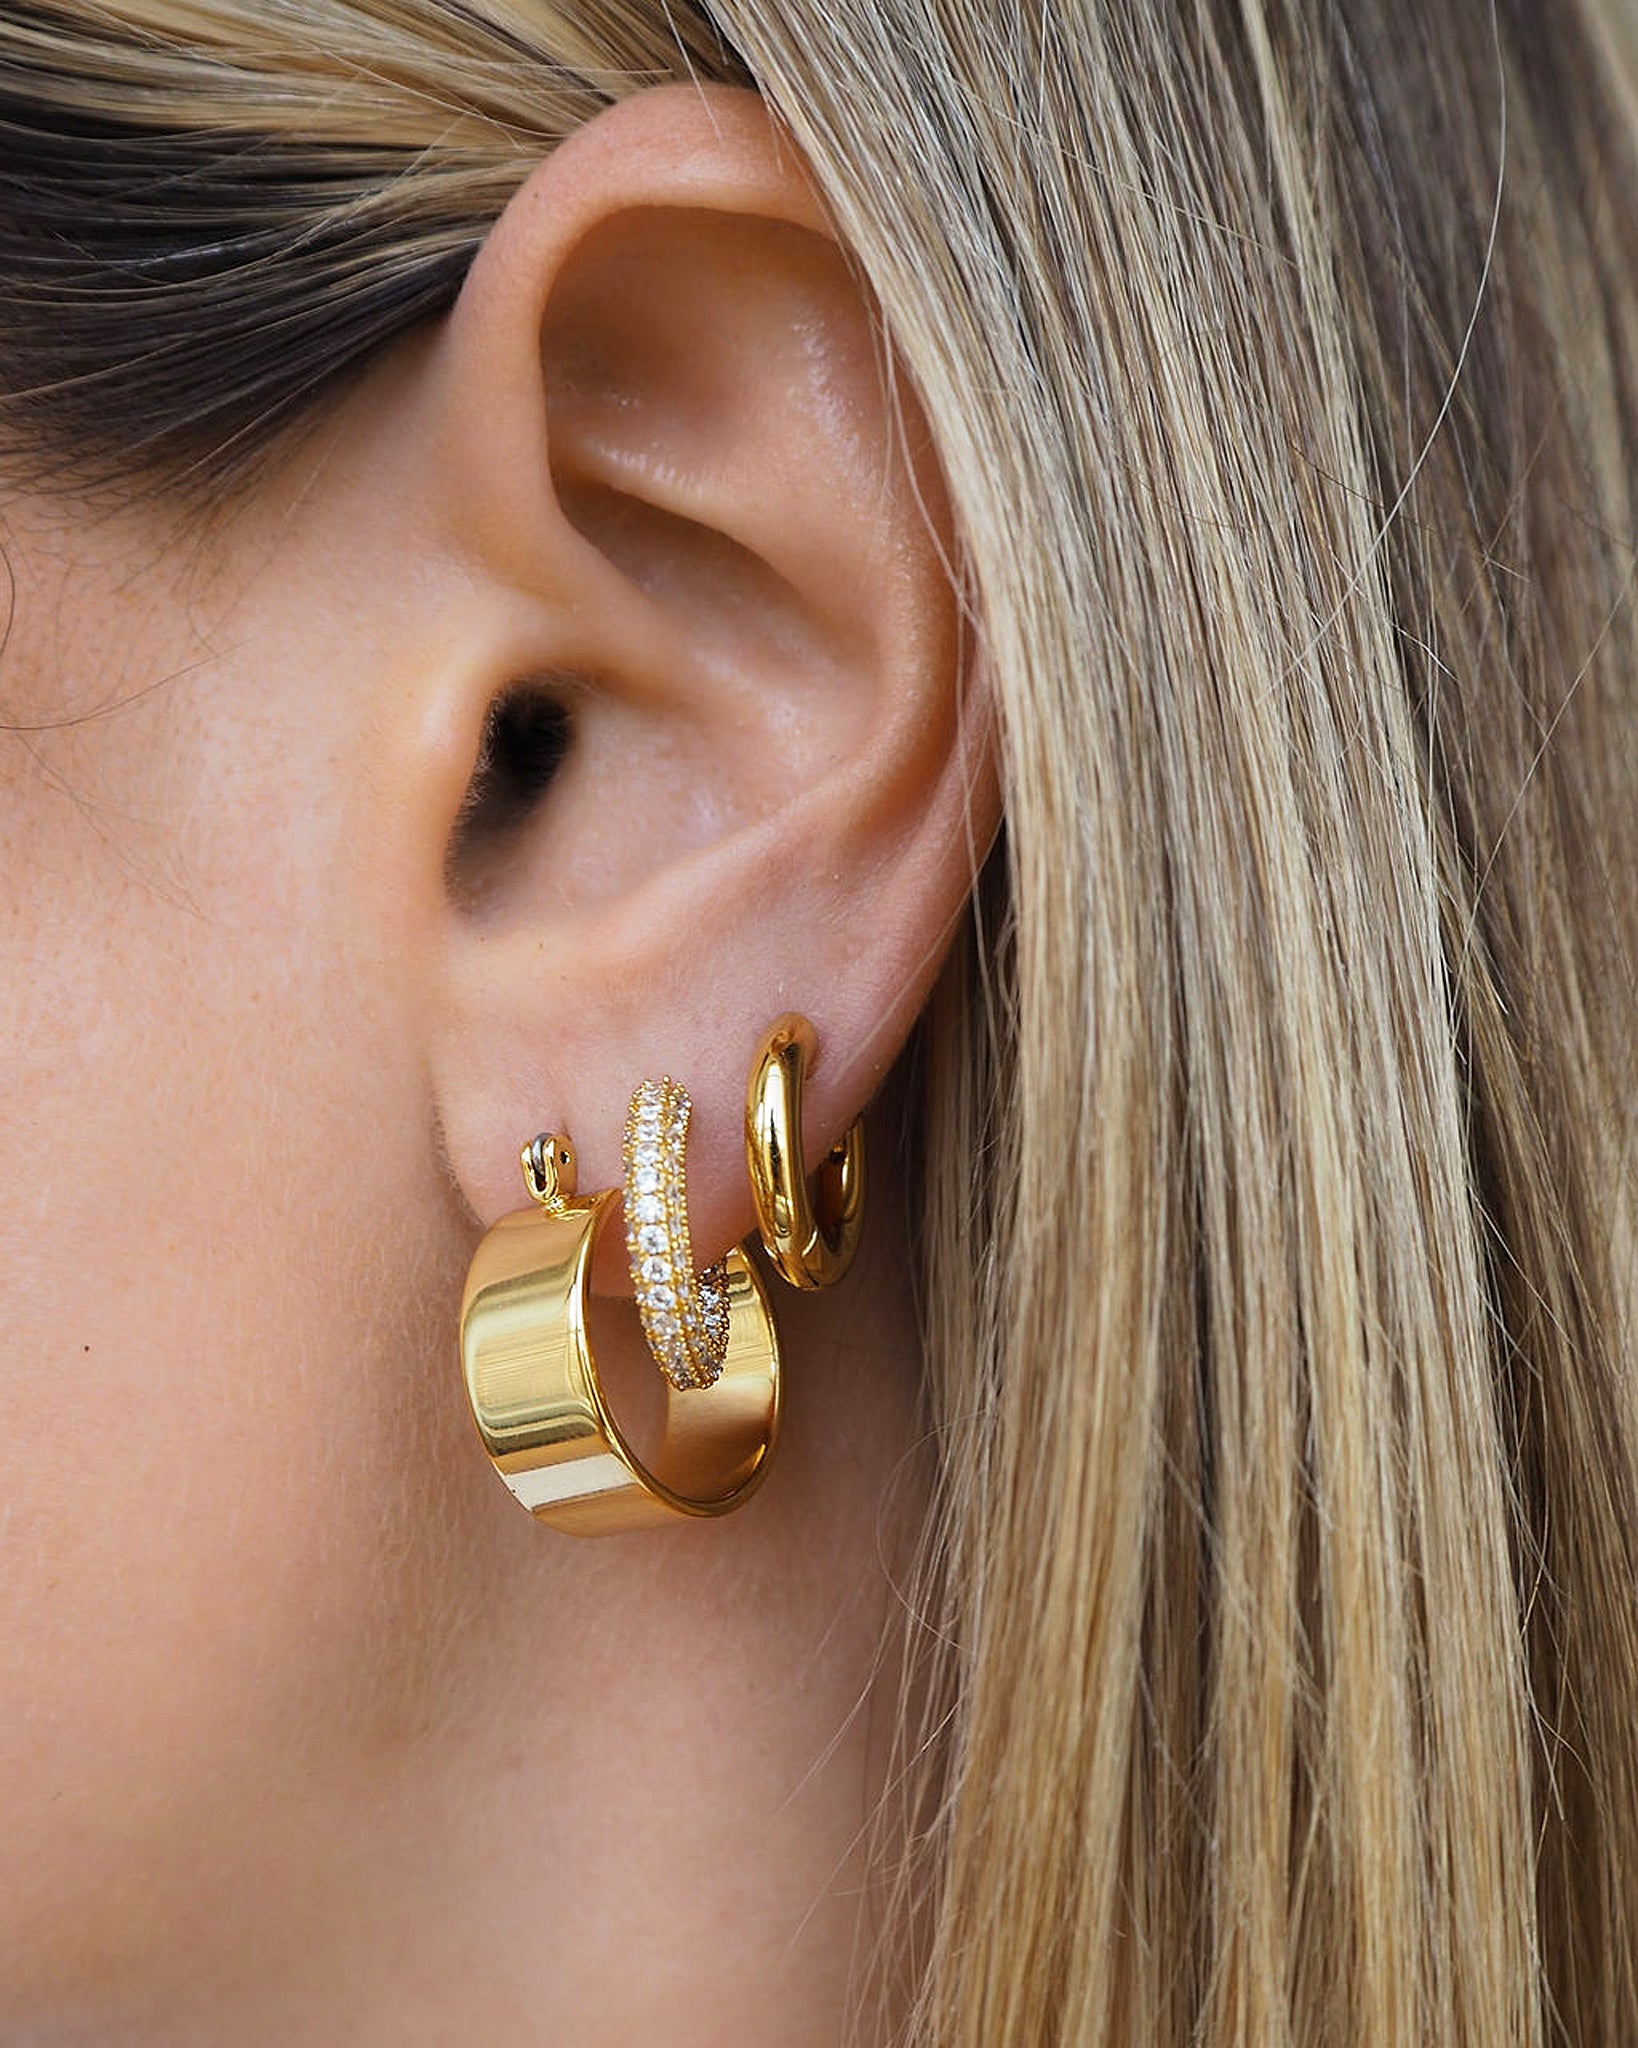 Luv Aj Positano Flat Wide Hoop Earrings in Polished 14k Antique Gold Plated